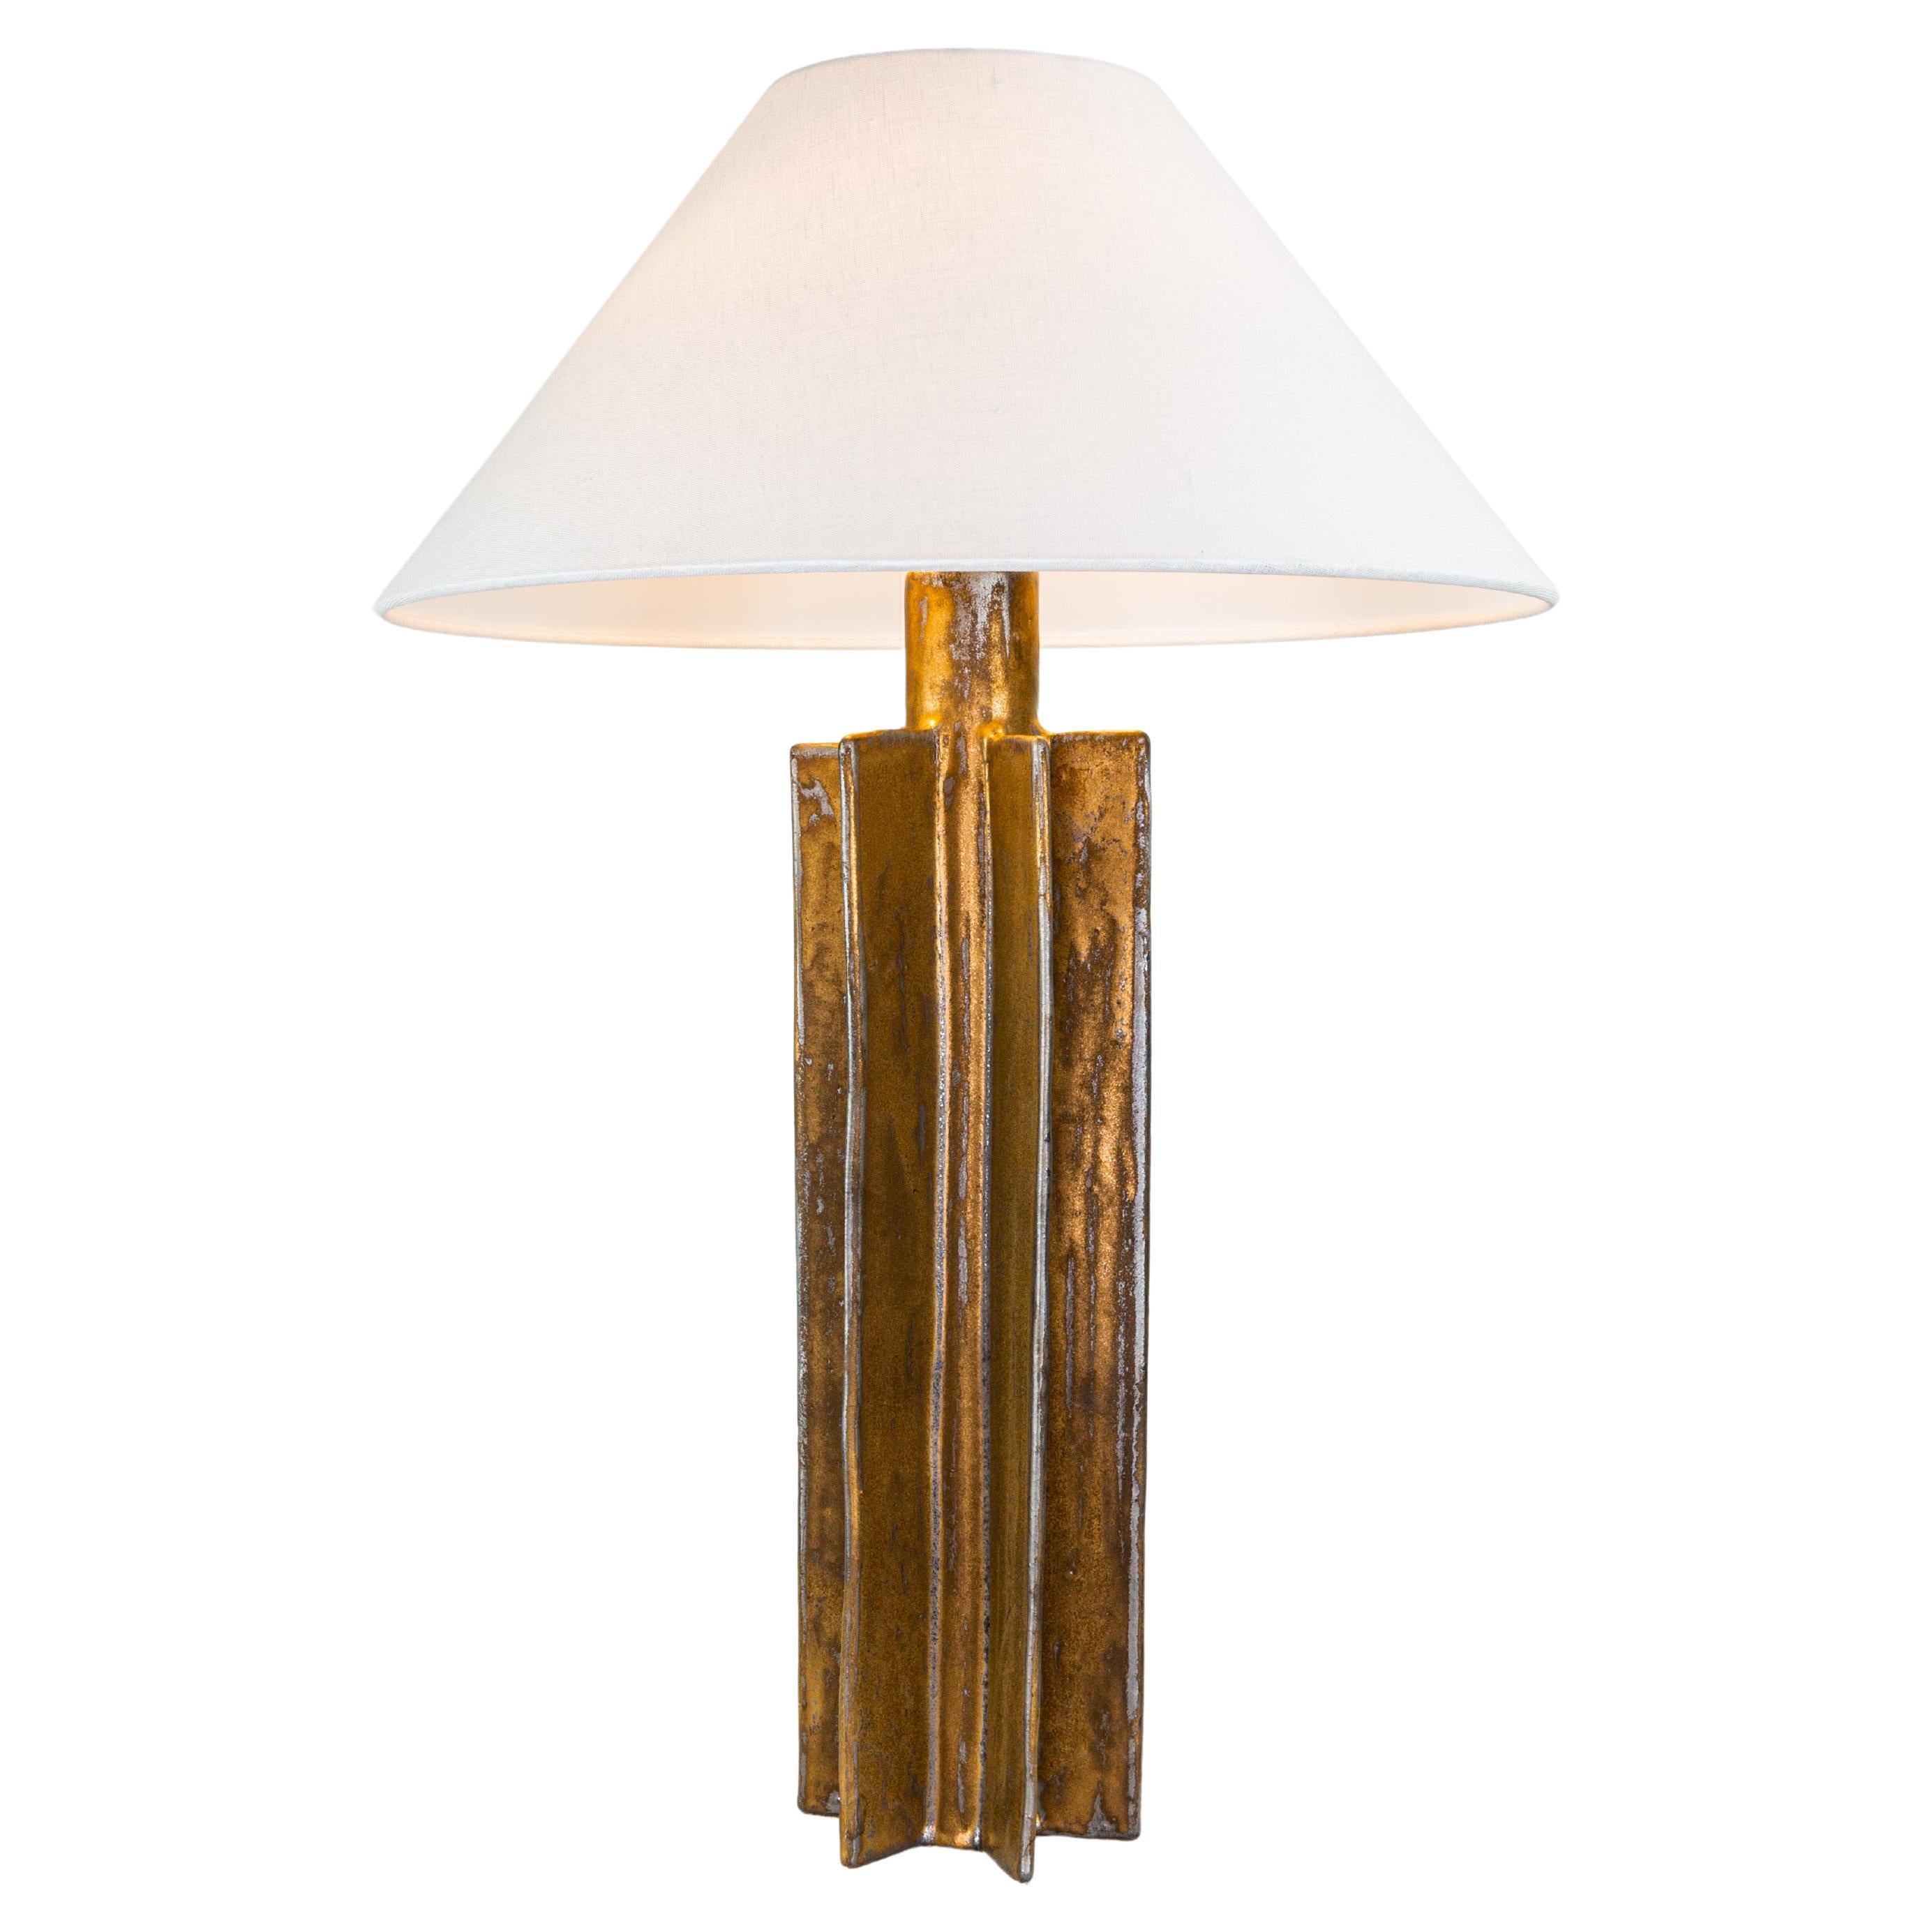 FIN Shade Table Lamp, Gold Glaze Finish, hanbuilt ceramic lamp by Kalin Asenov